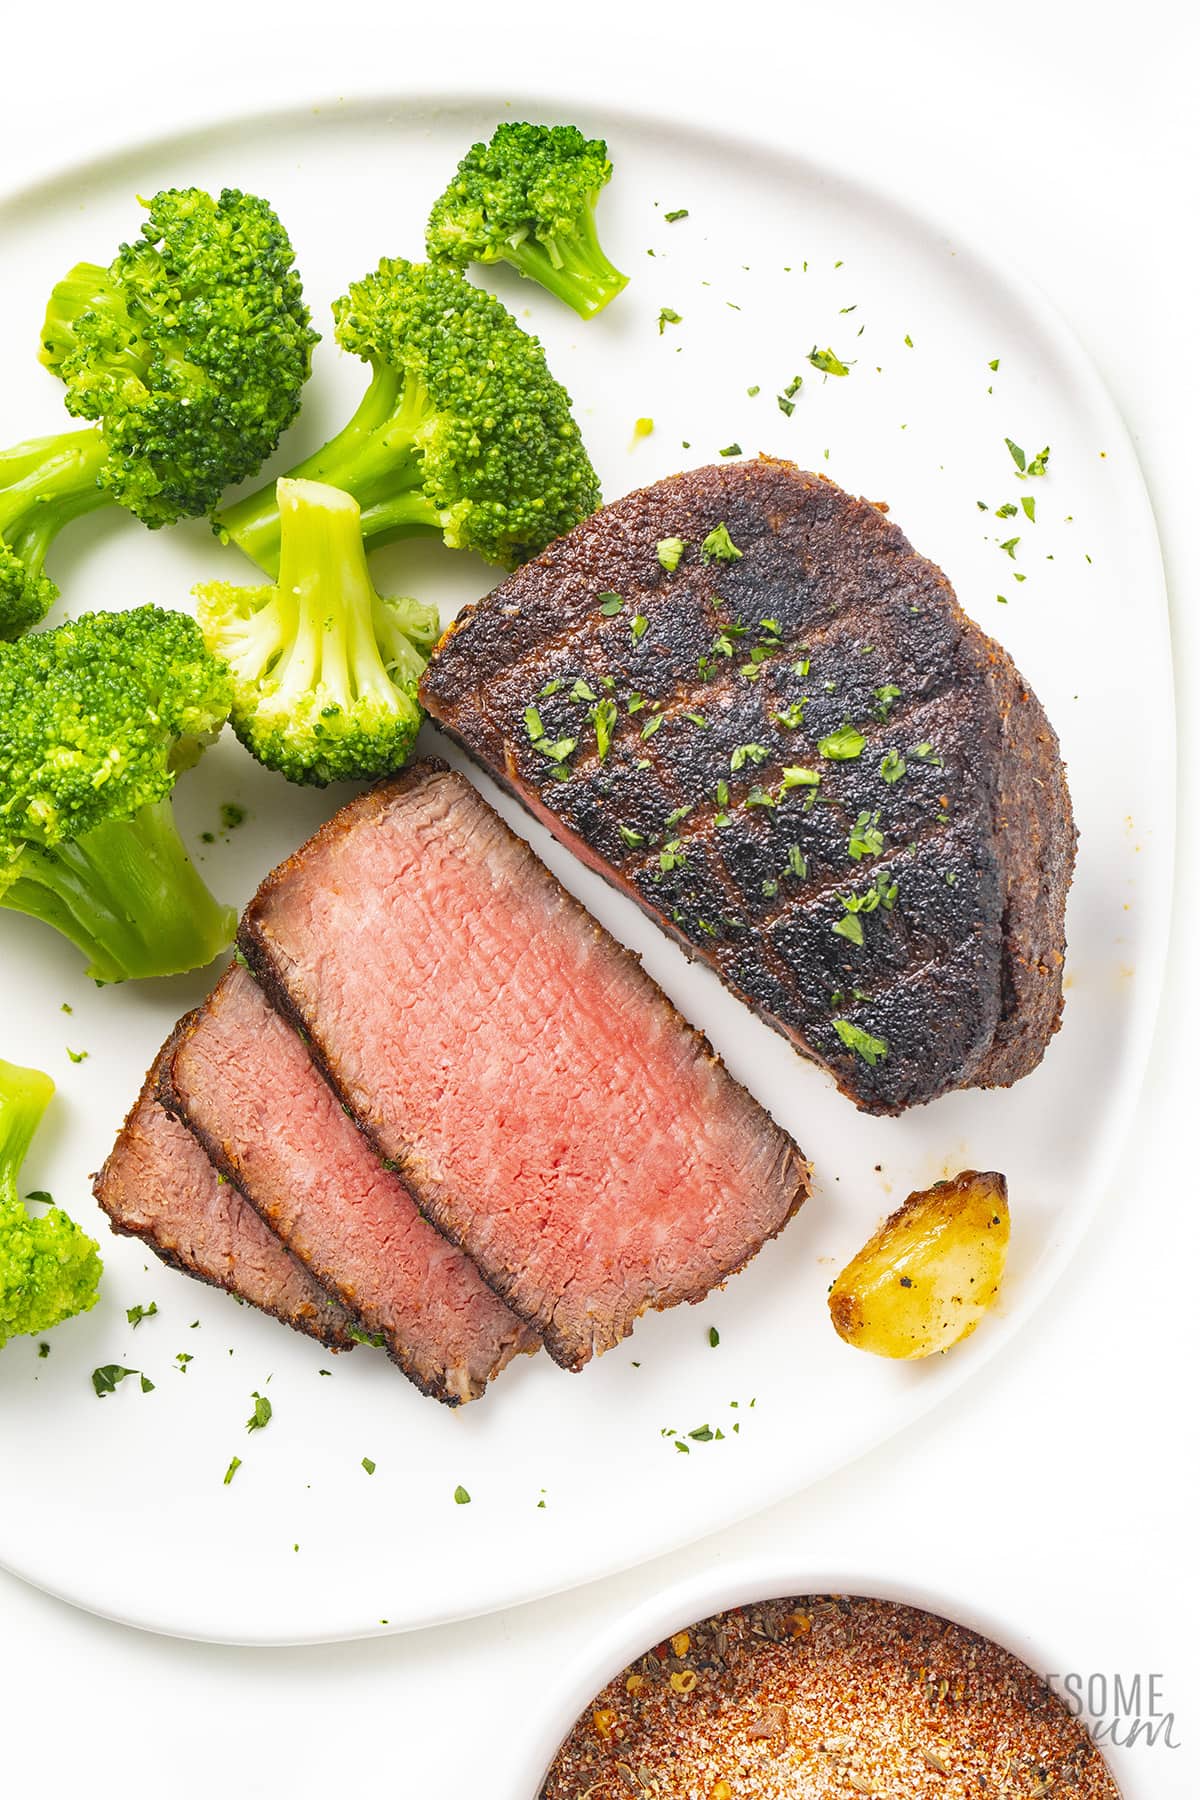 Reverse seared steak with broccoli.